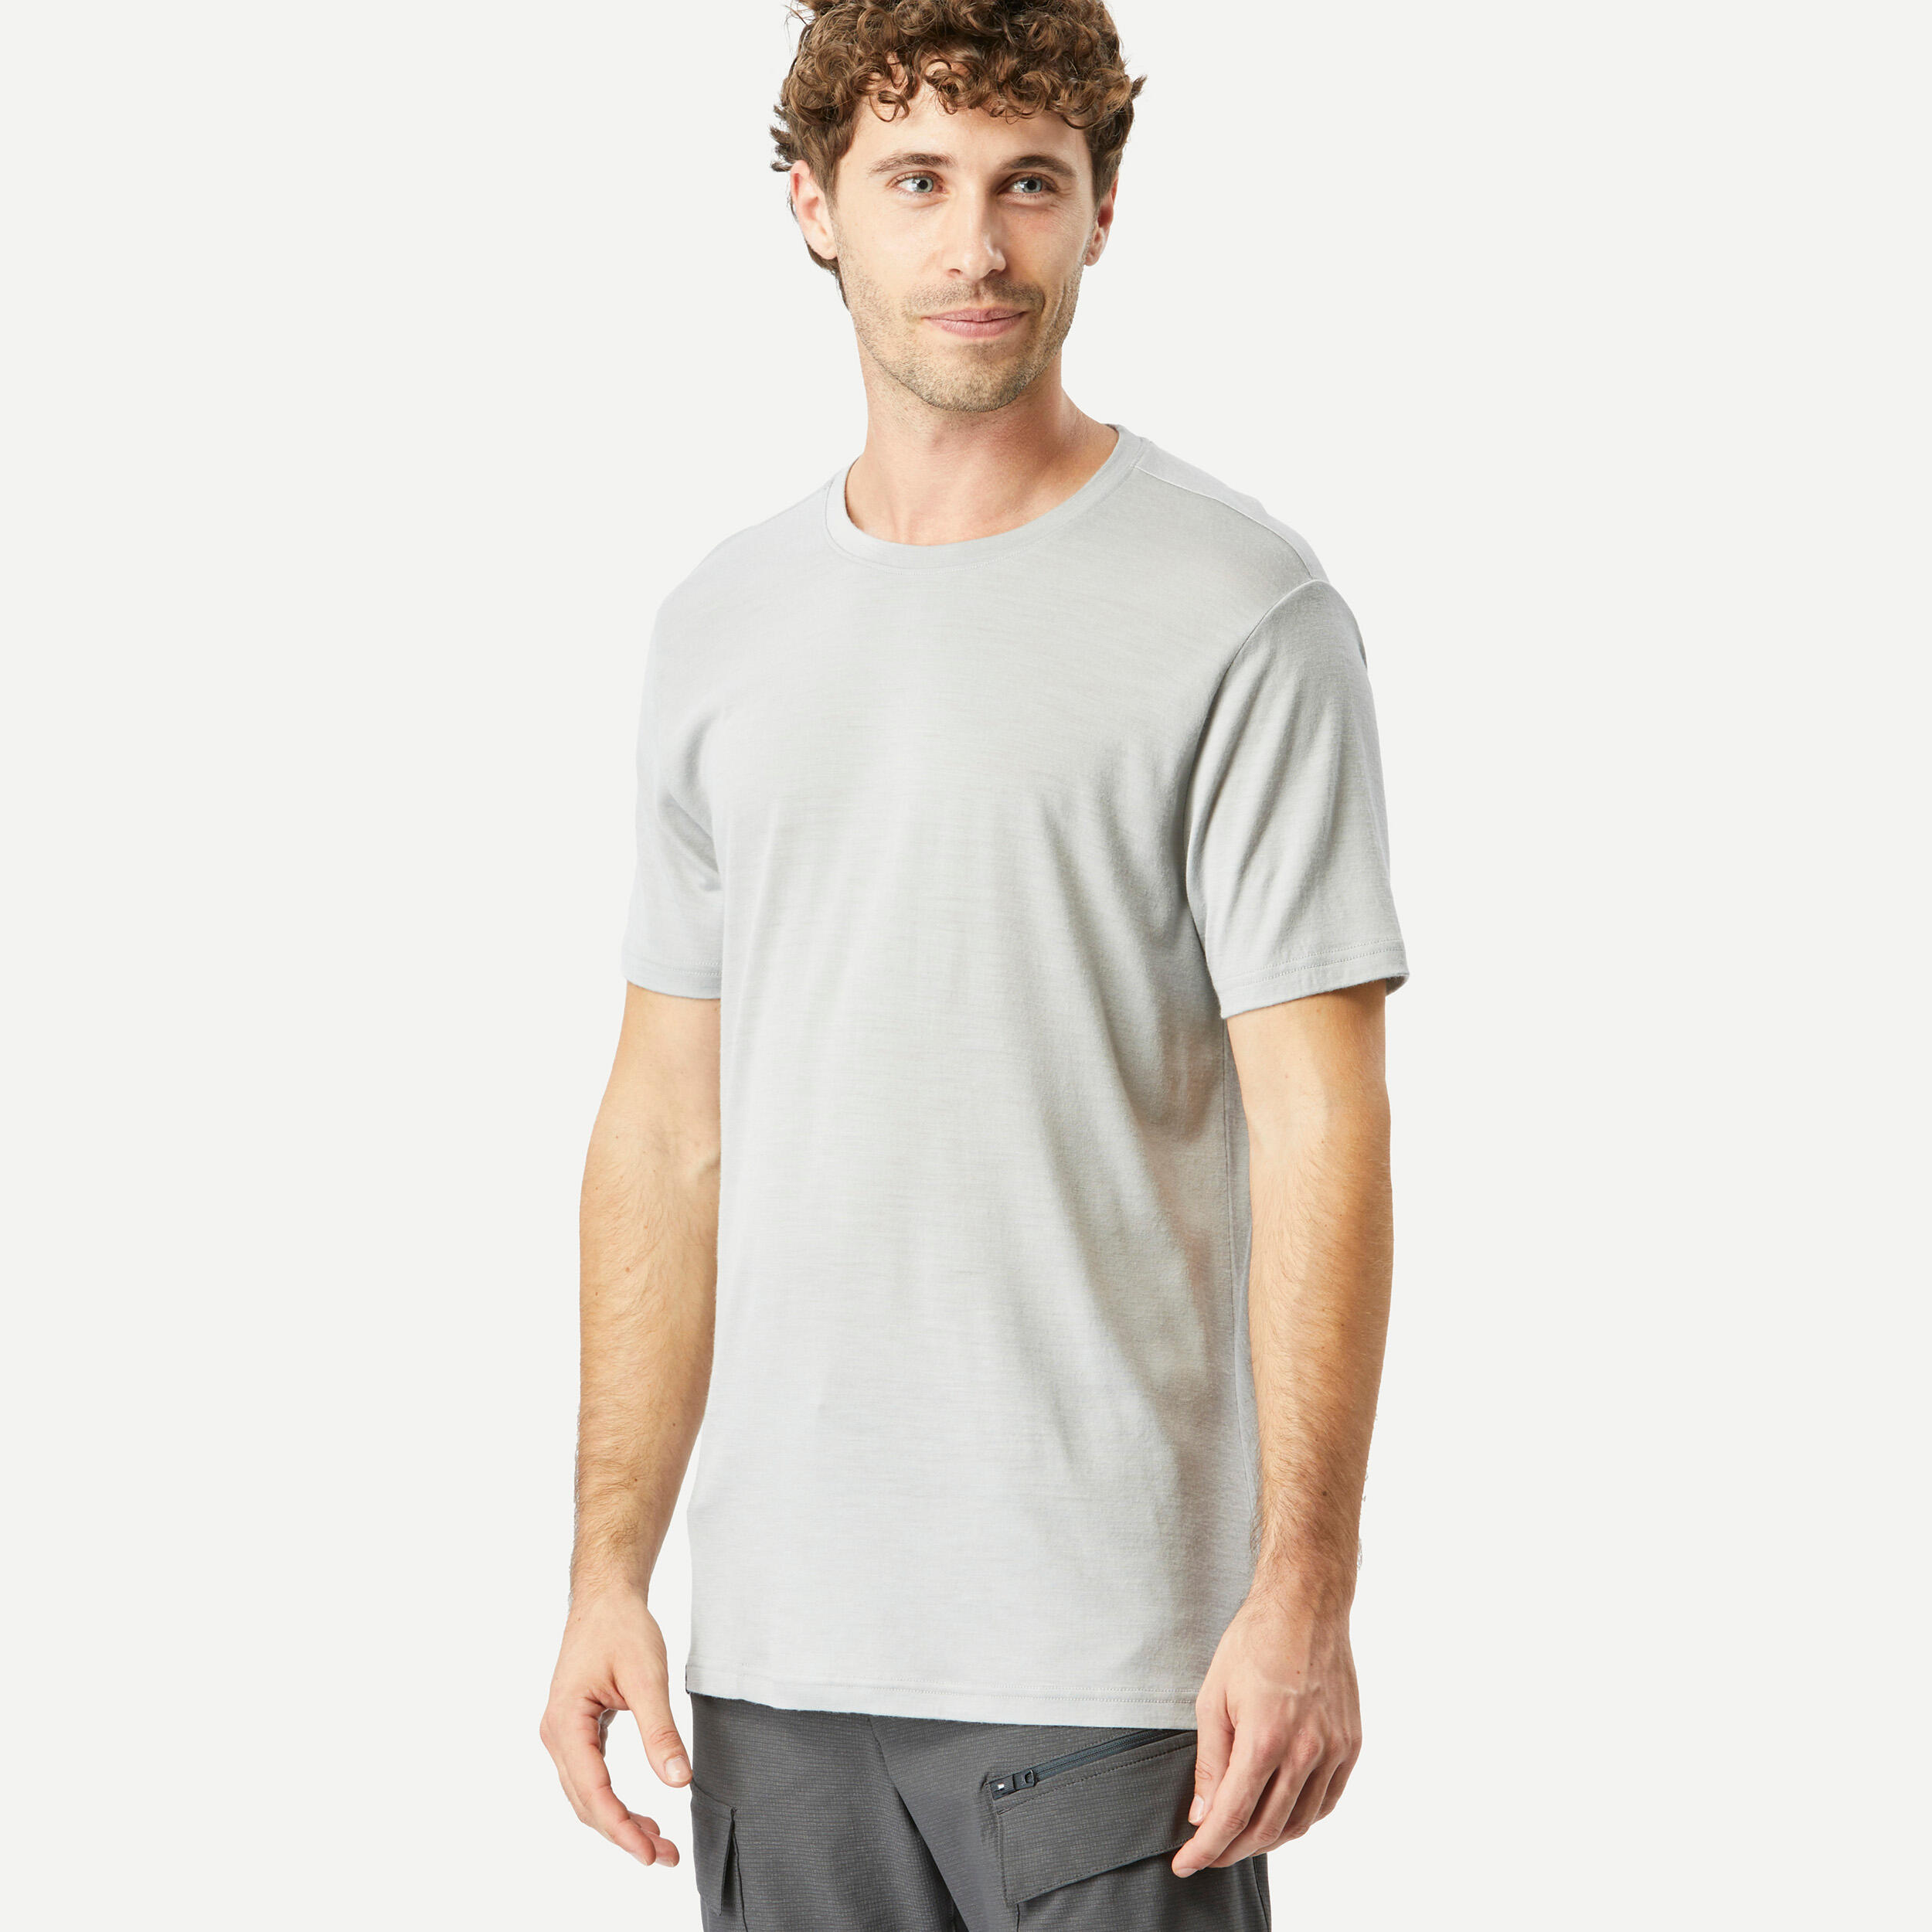 Men’s short-sleeved Merino wool hiking travel t-shirt - TRAVEL 500 grey 1/6